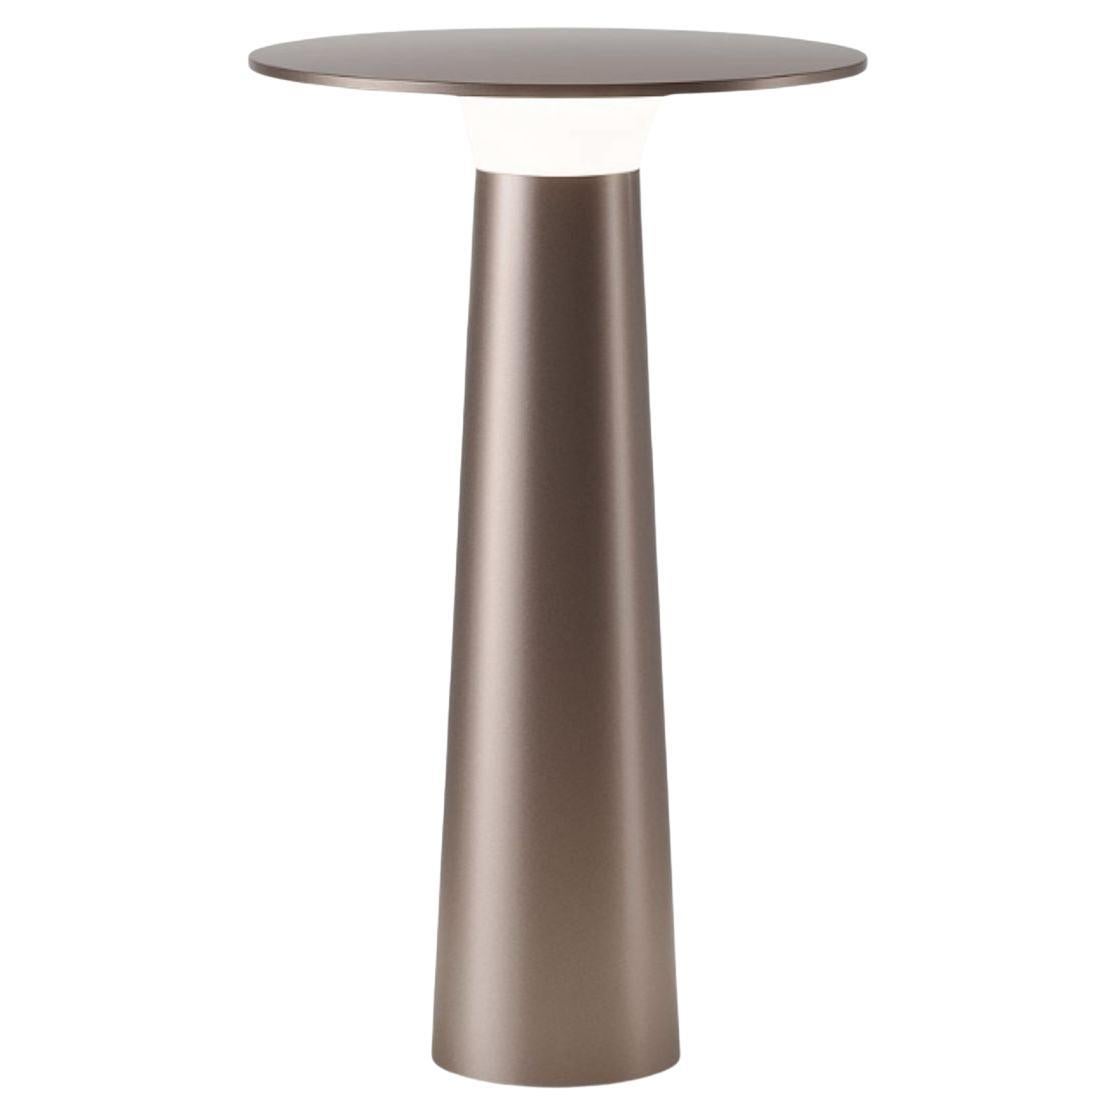 Klaus Nolting 'Lix' Portable Outdoor Aluminum Table Lamp in Bronze for Ip44de For Sale